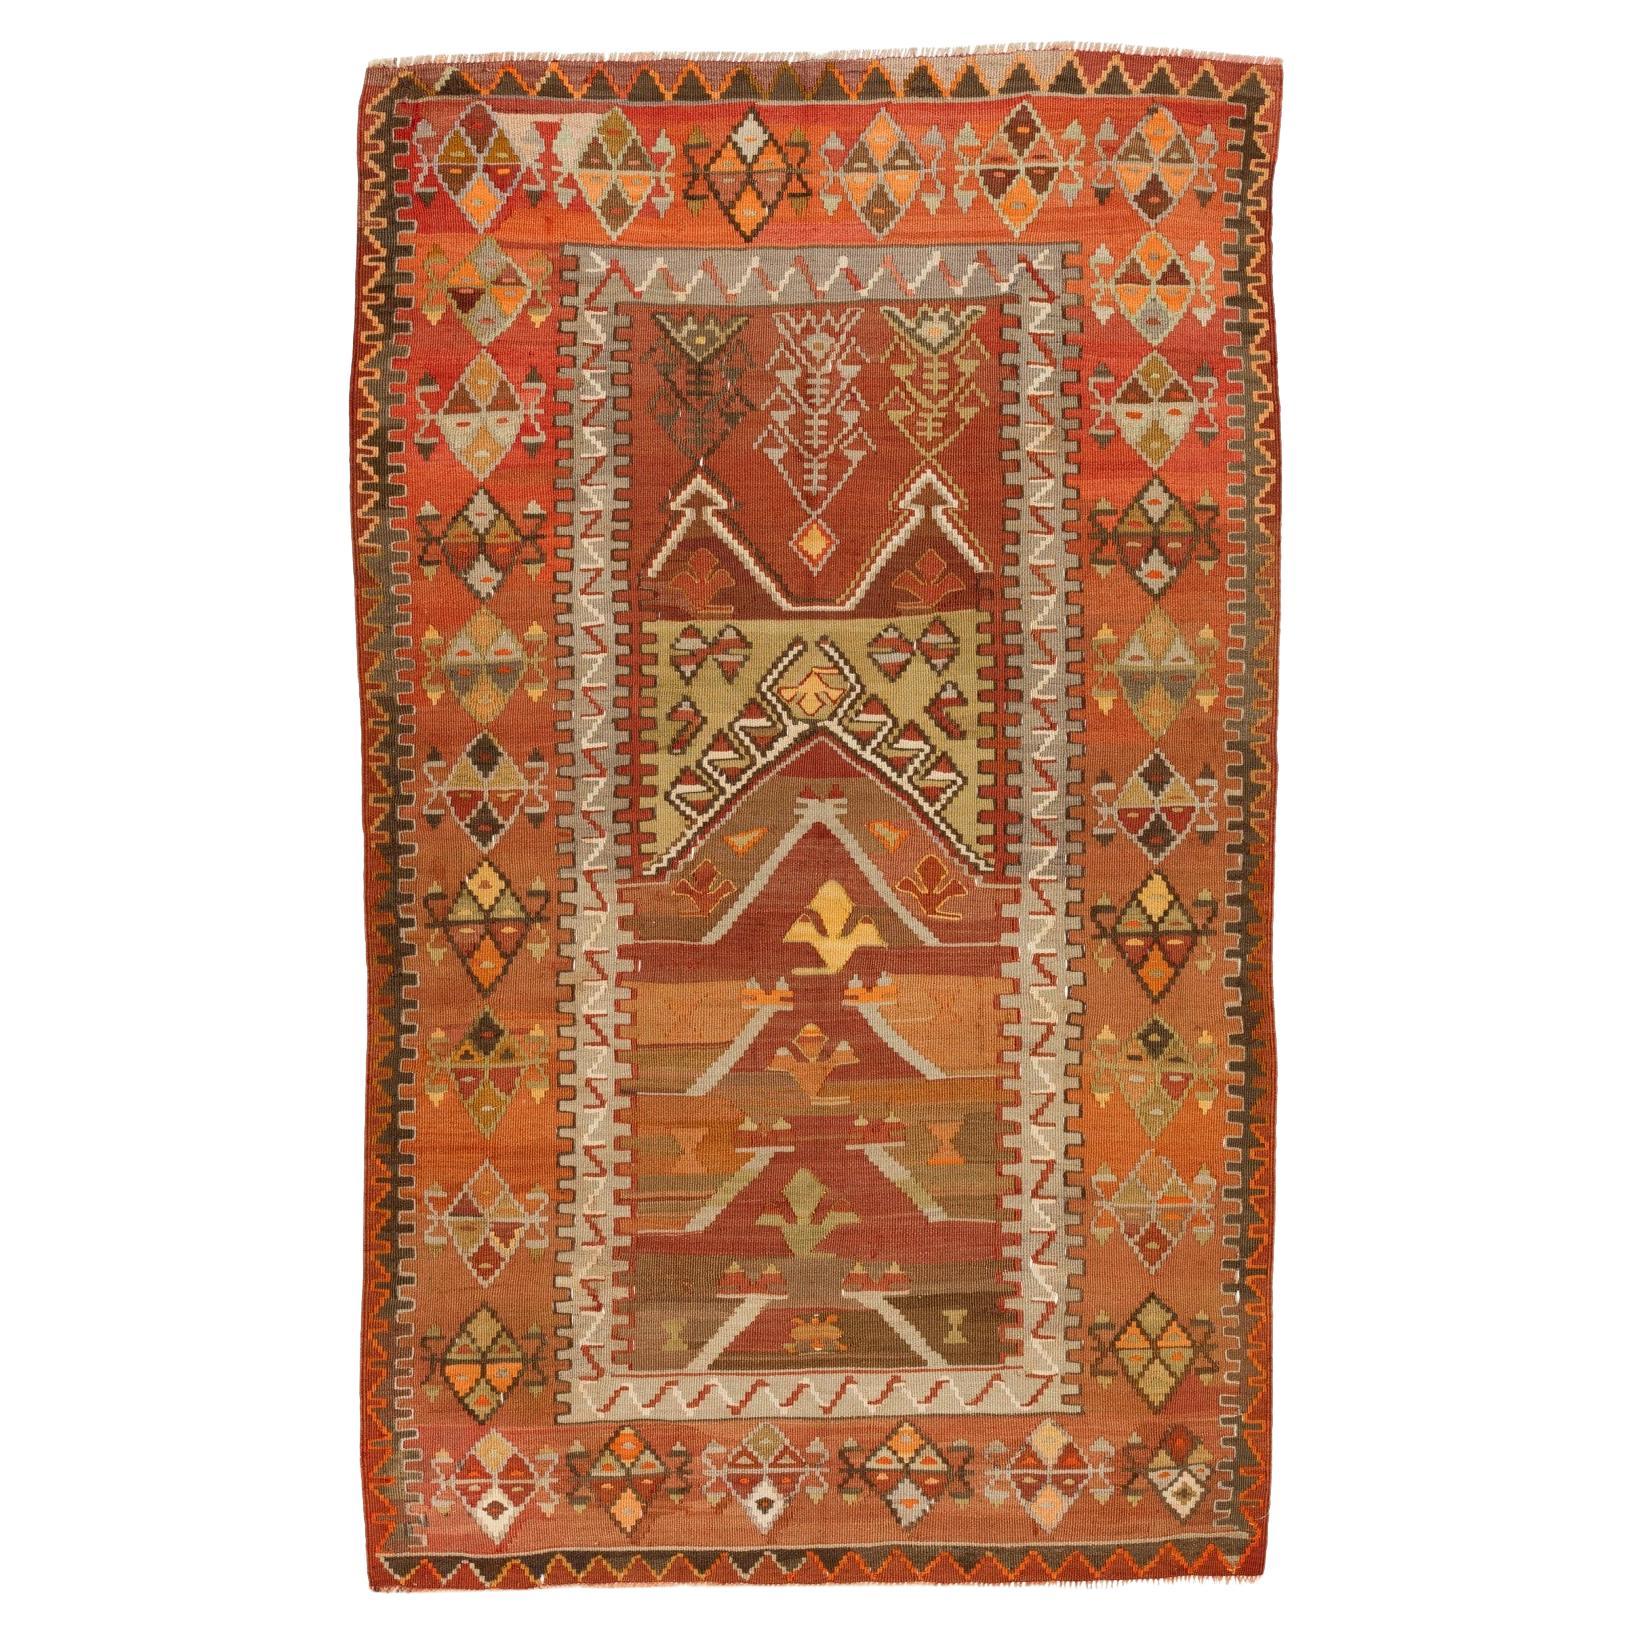 Antique Konya Kilim Rug Wool Old Central Anatolian Turkish Carpet For Sale